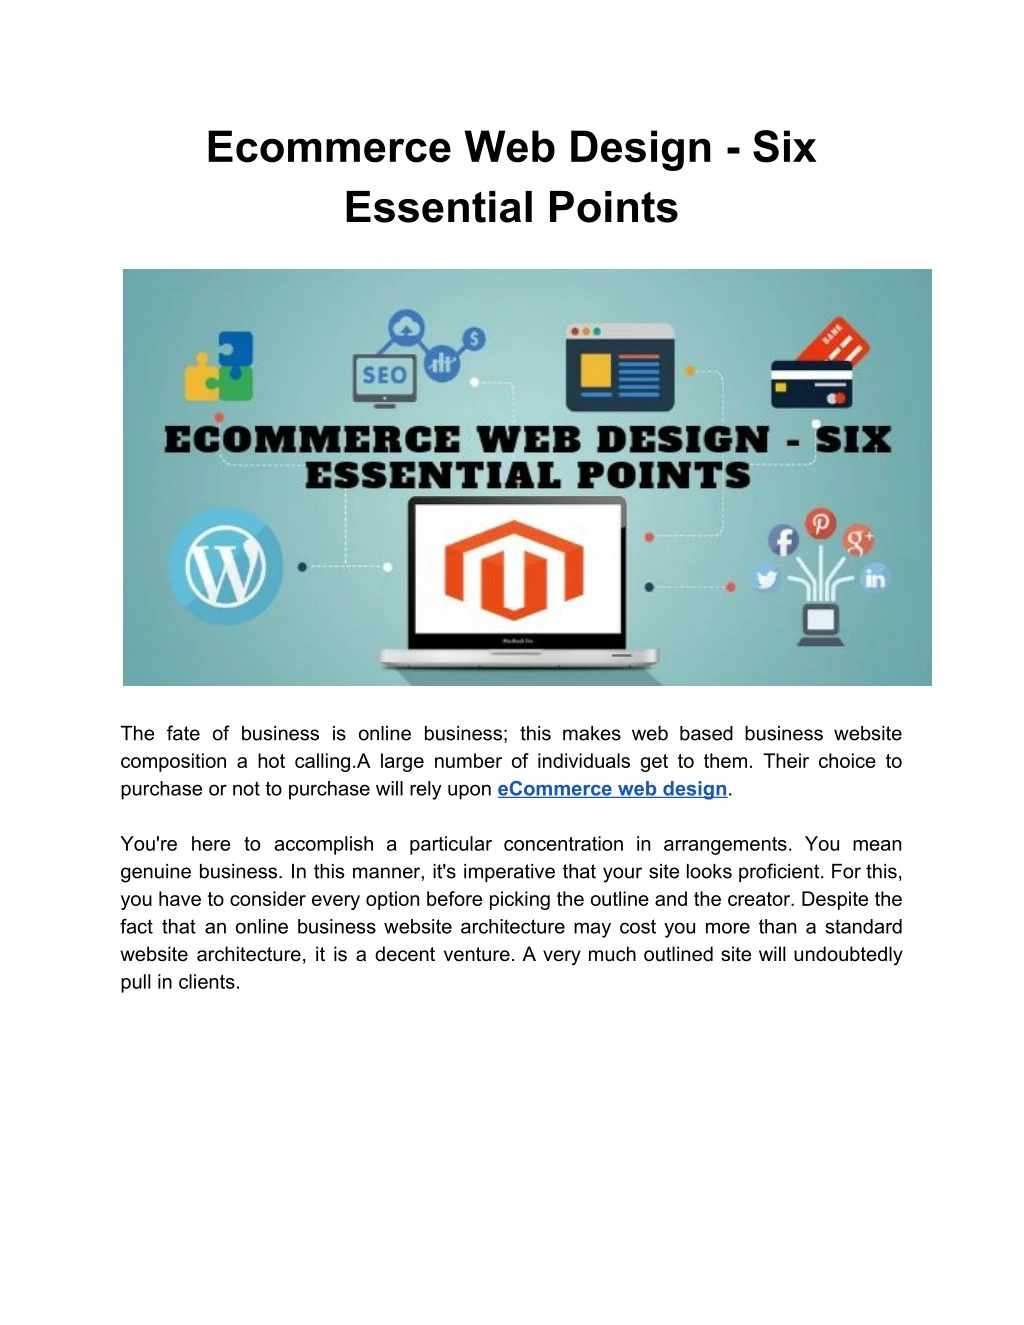 ecommerce web design six essential points